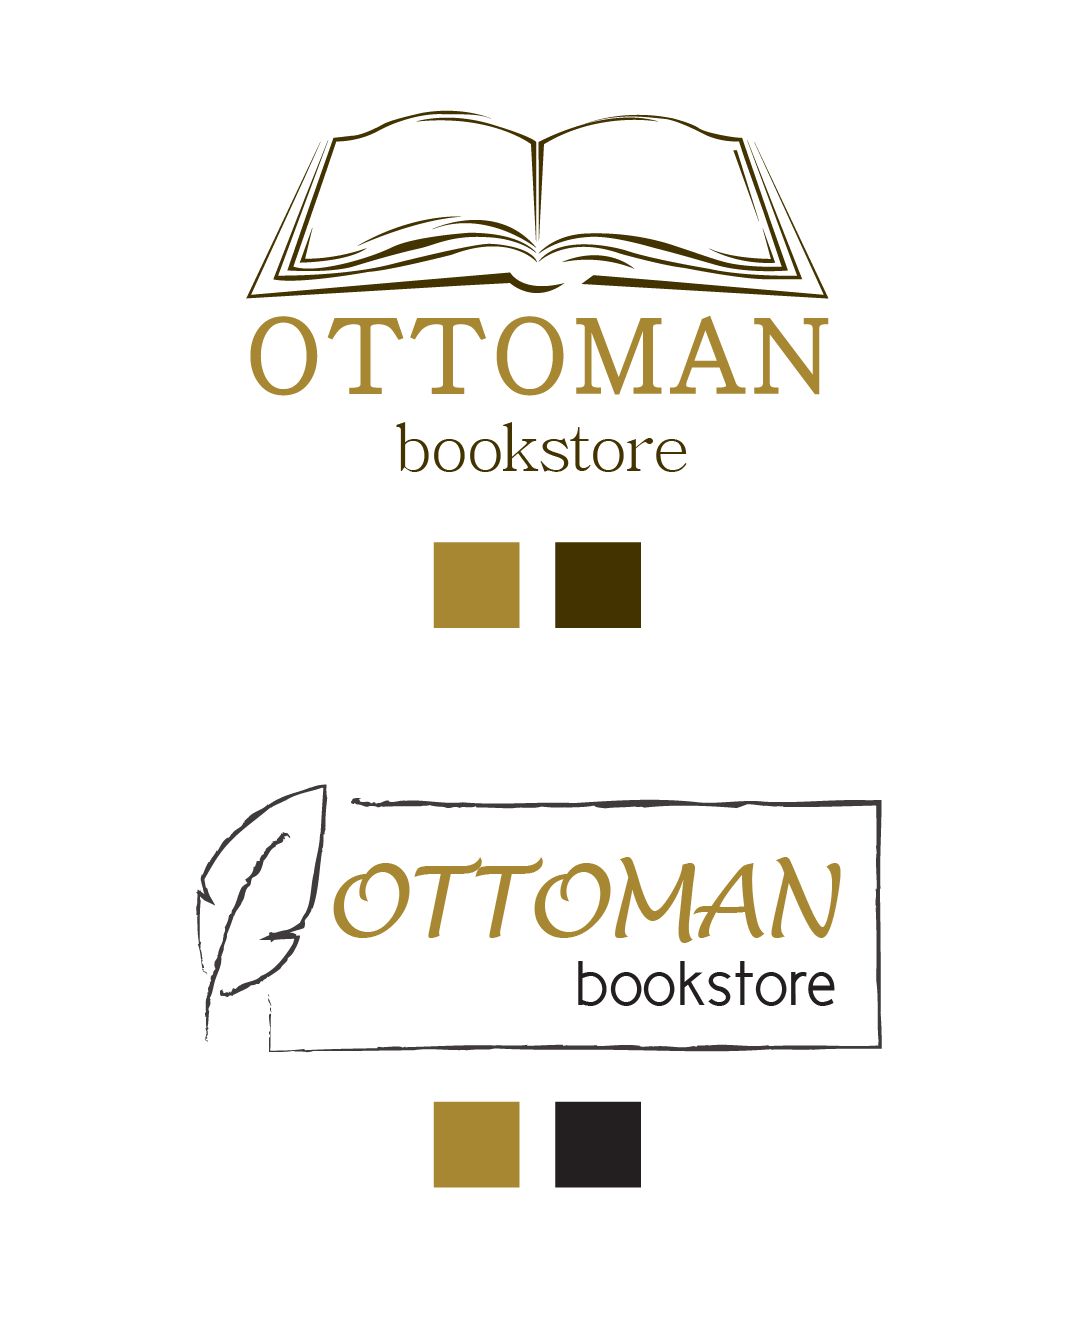 logo Logotype emblem ottoman Bookstore oriental